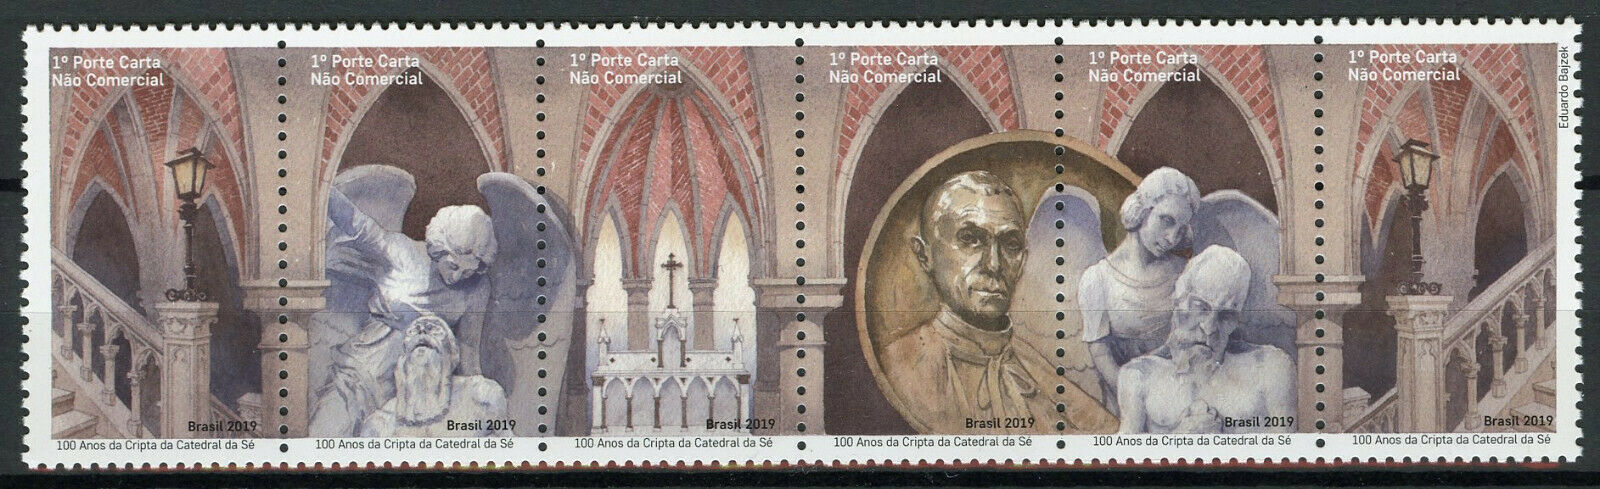 Brazil Architecture Stamps 2019 MNH Crypt Se Cathedral Sculptures Art 6v Strip